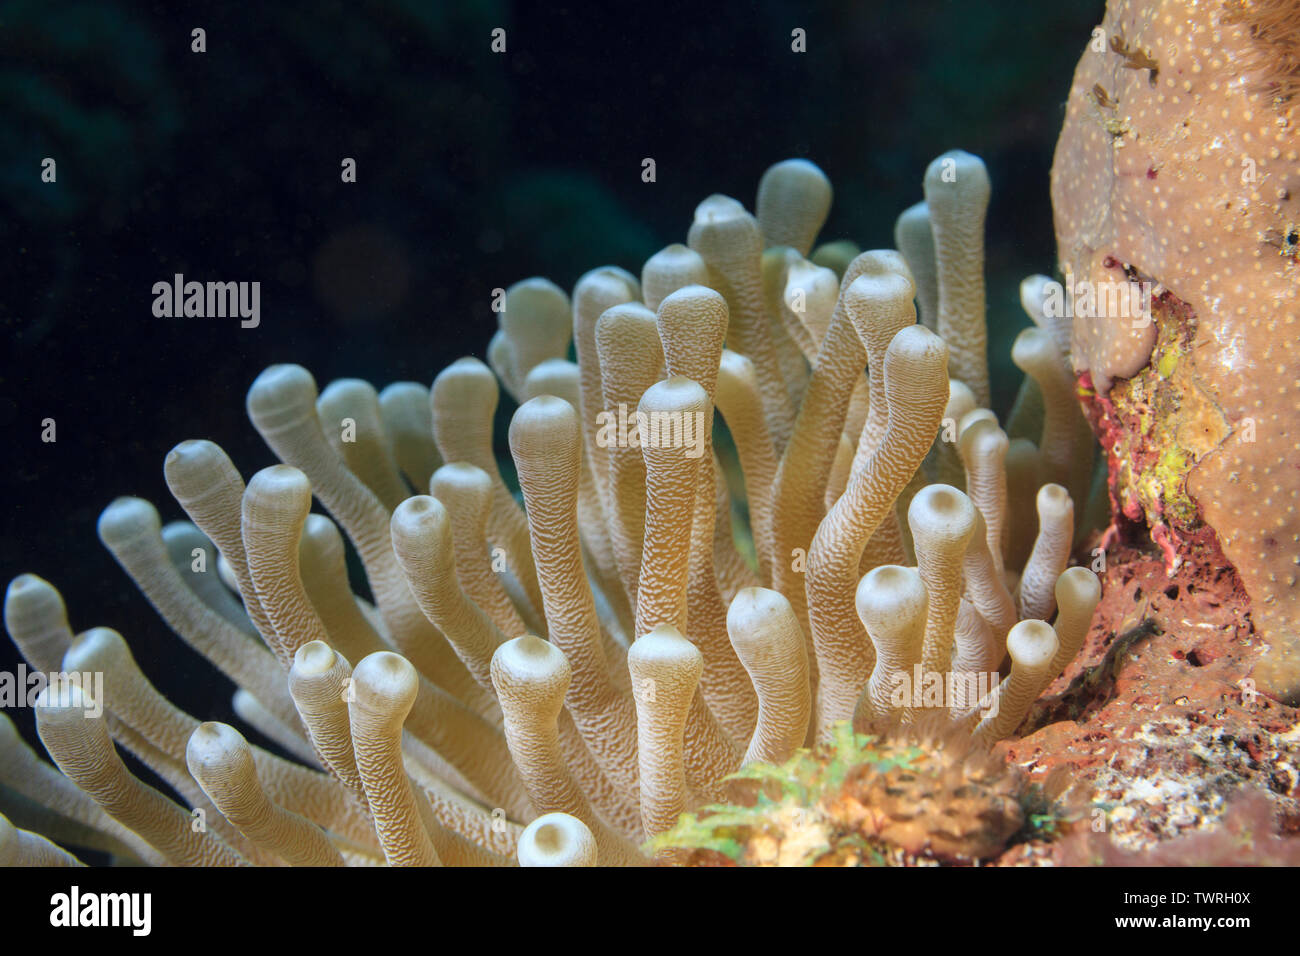 Anemone gigante (Condylactis gigantea) nel mar dei Caraibi circa Bonaire, Antille sottovento. Foto V.D. Foto Stock